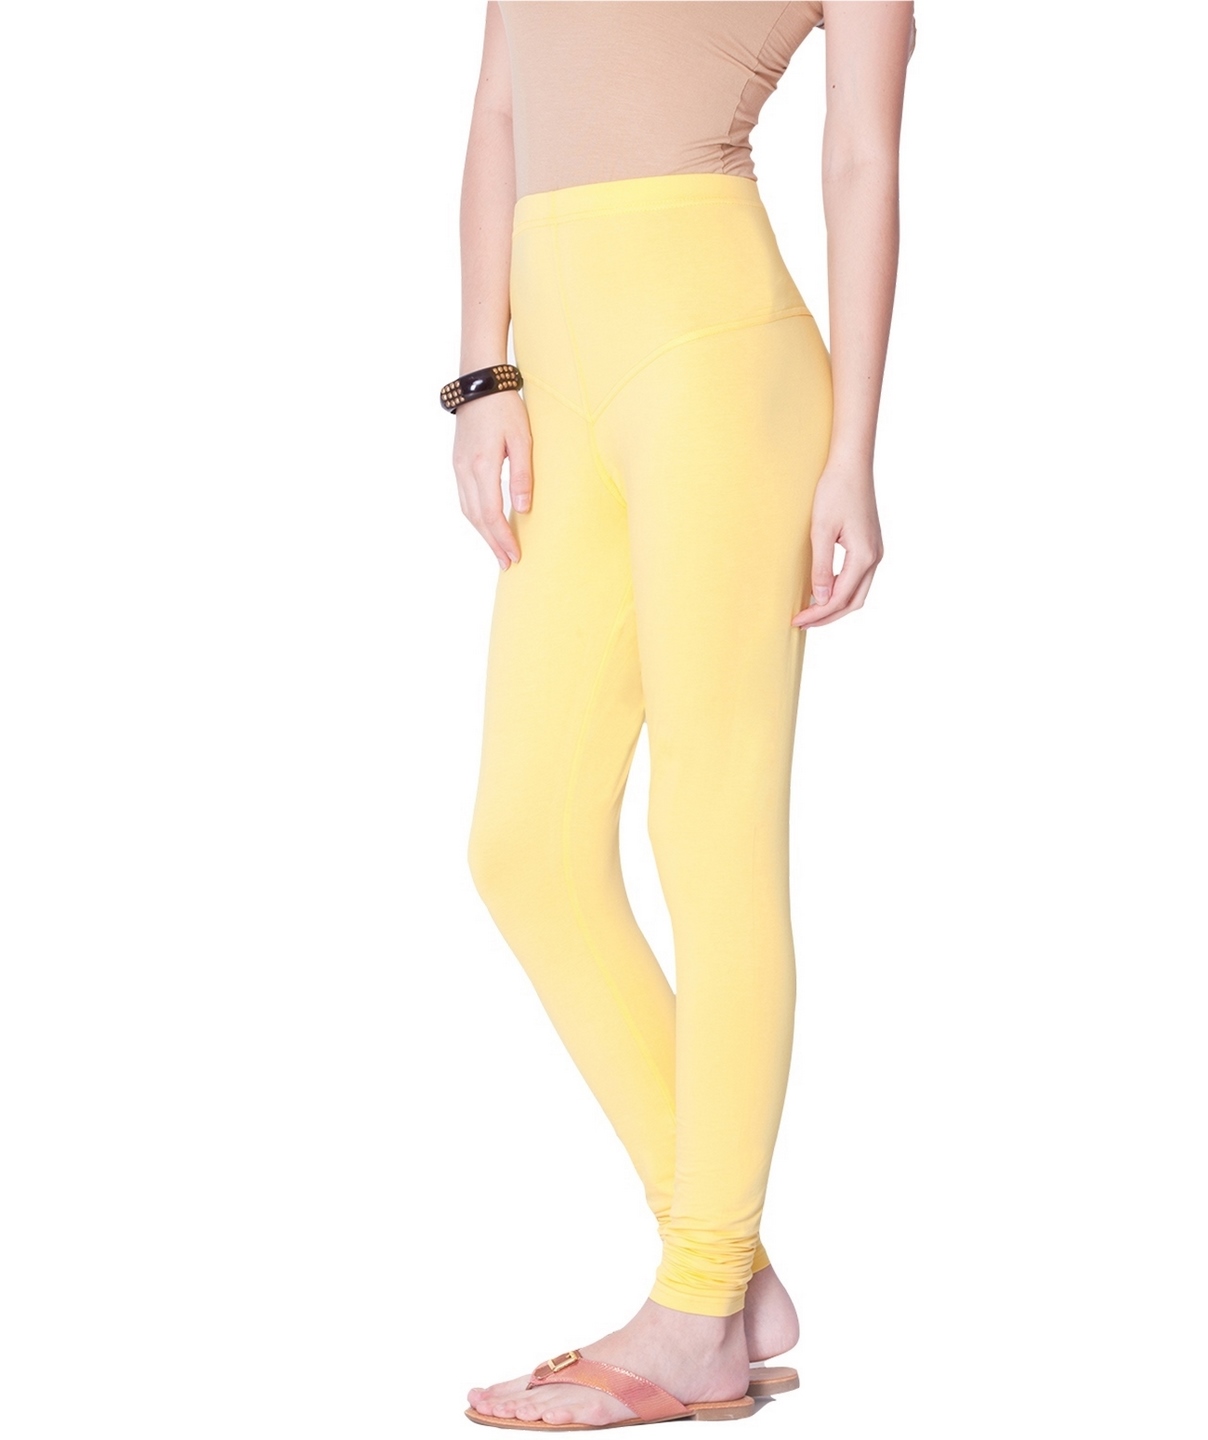 Lemon Yellow 2 Piece Shorts Set – Body Of Agoddess Fitness